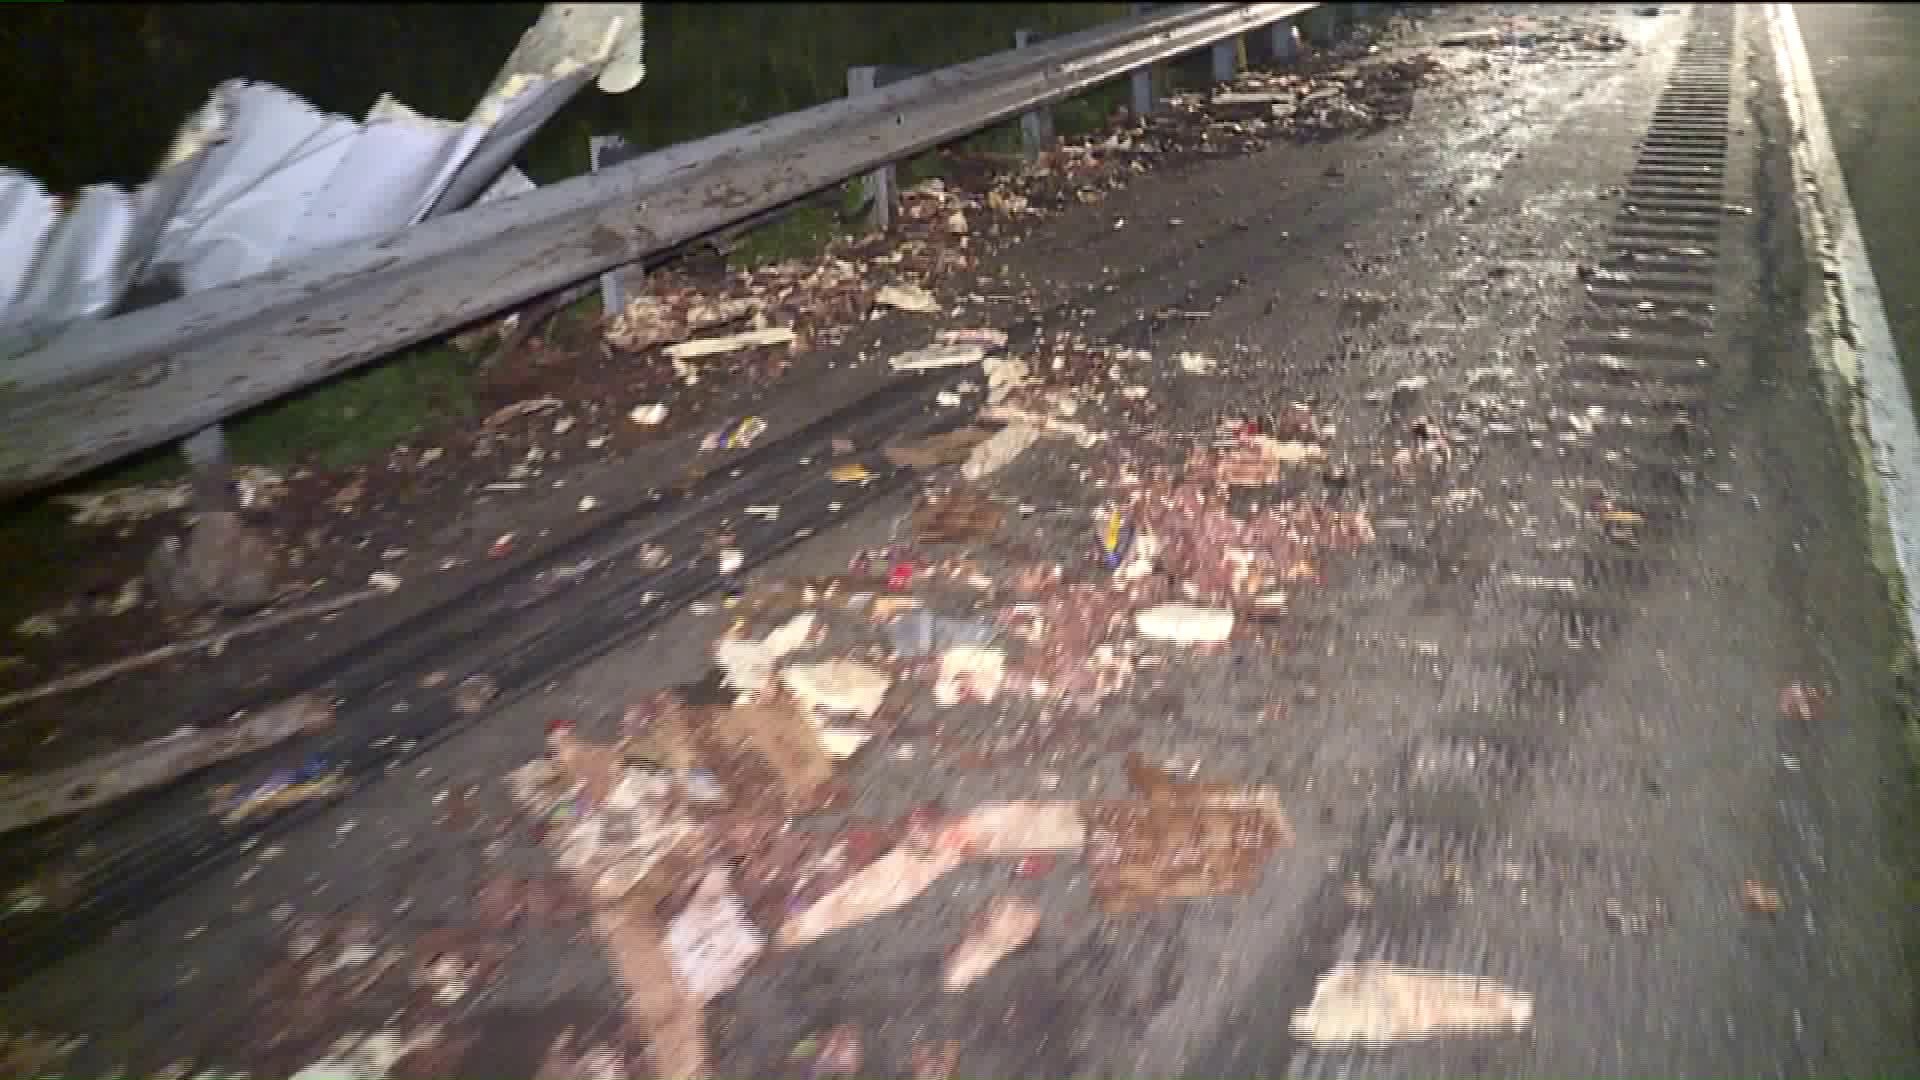 Tractor Trailer Crash Left Chocolaty Mess on Highway